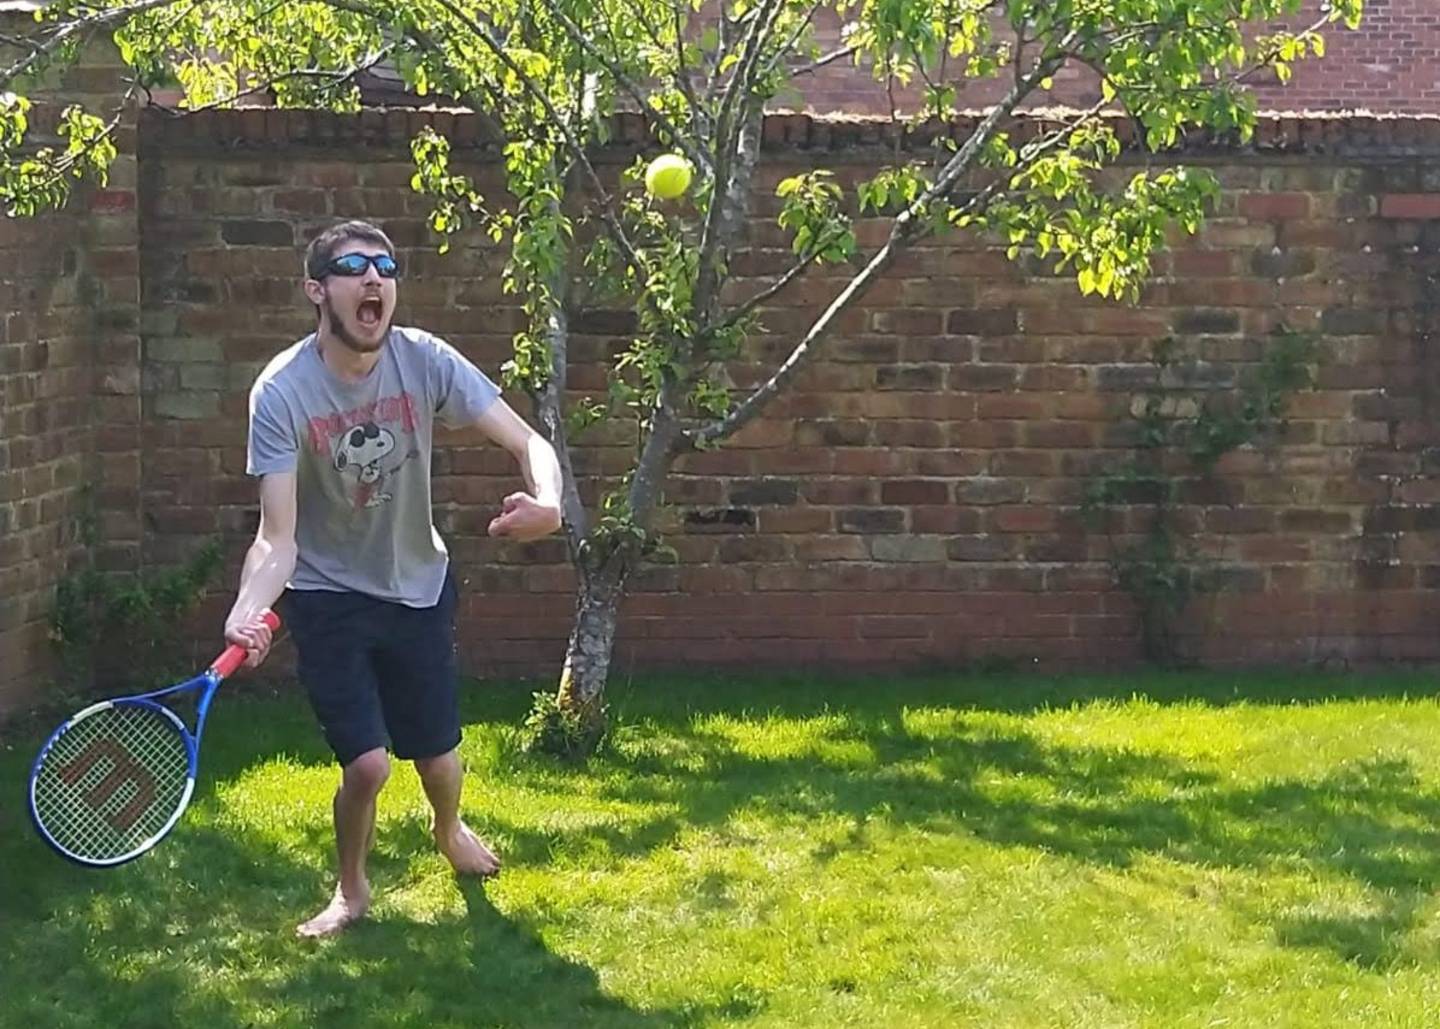 George playing tennis in garden